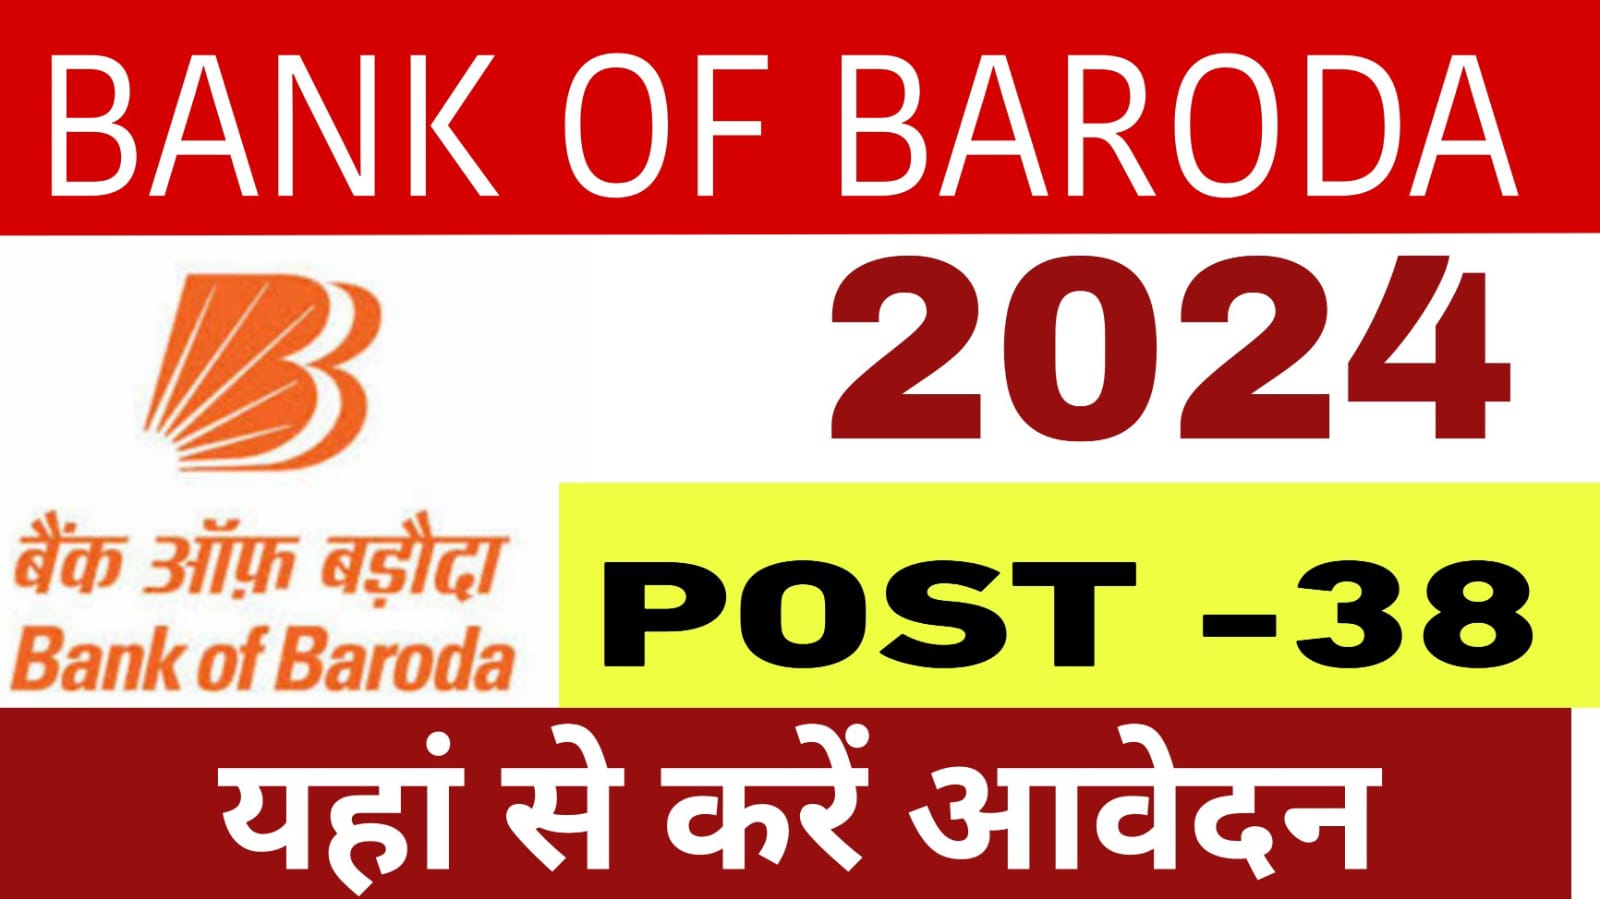 Bank of Baroda security officer Recruitment 2024